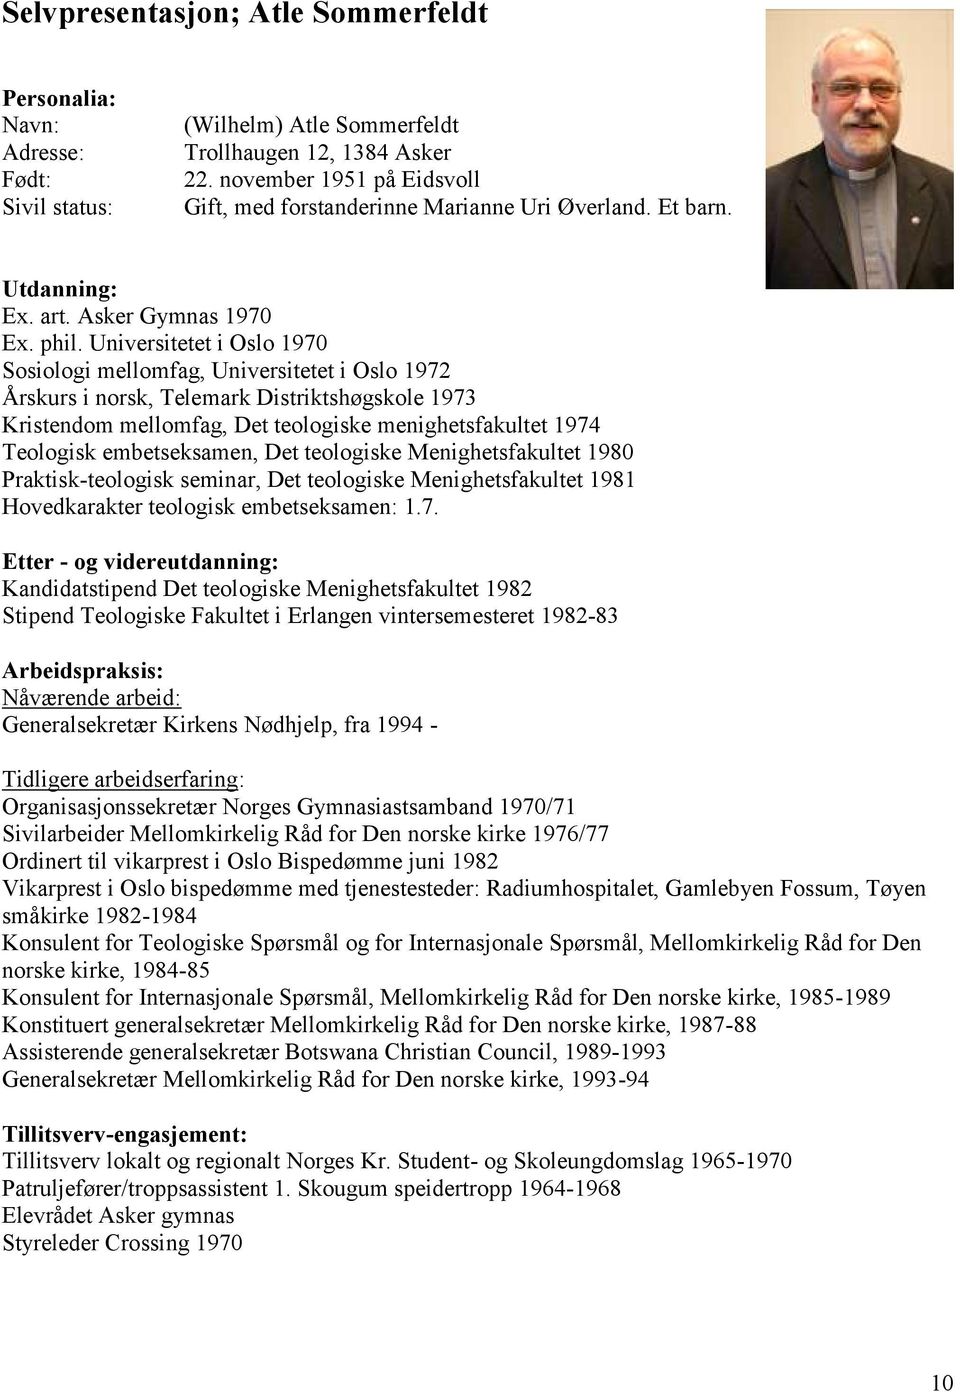 Universitetet i Oslo 1970 Sosiologi mellomfag, Universitetet i Oslo 1972 Årskurs i norsk, Telemark Distriktshøgskole 1973 Kristendom mellomfag, Det teologiske menighetsfakultet 1974 Teologisk